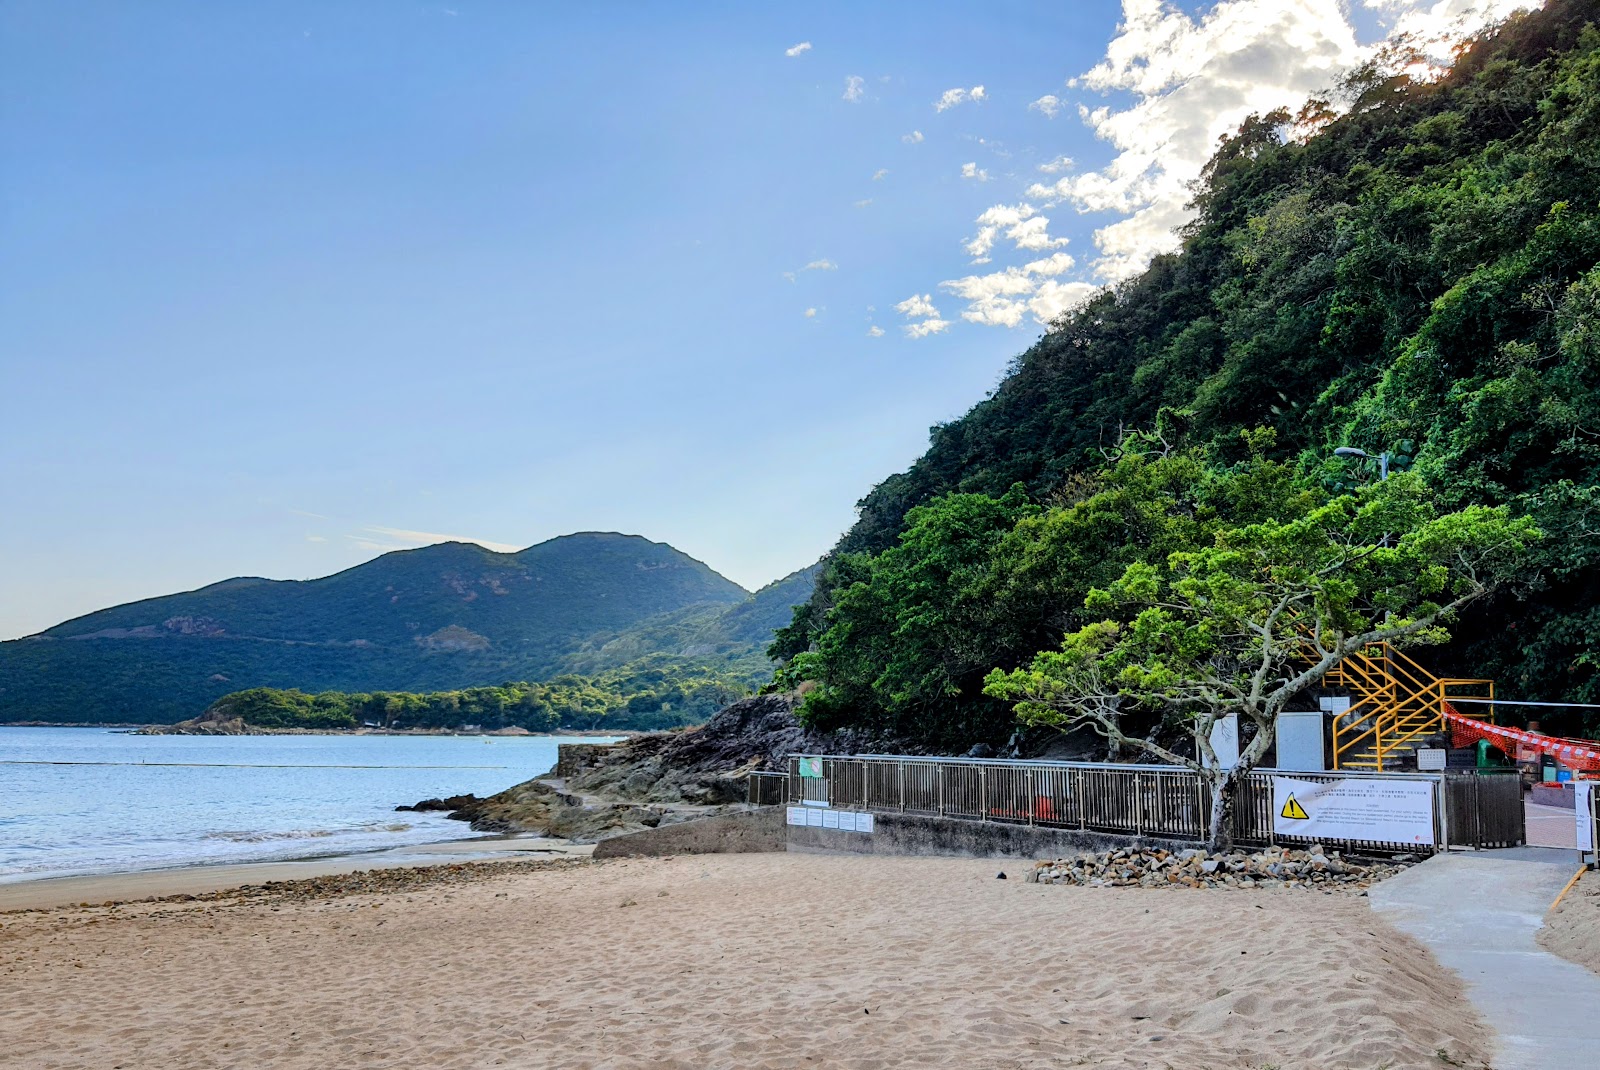 Foto de Clear Water Bay Beach - lugar popular entre os apreciadores de relaxamento